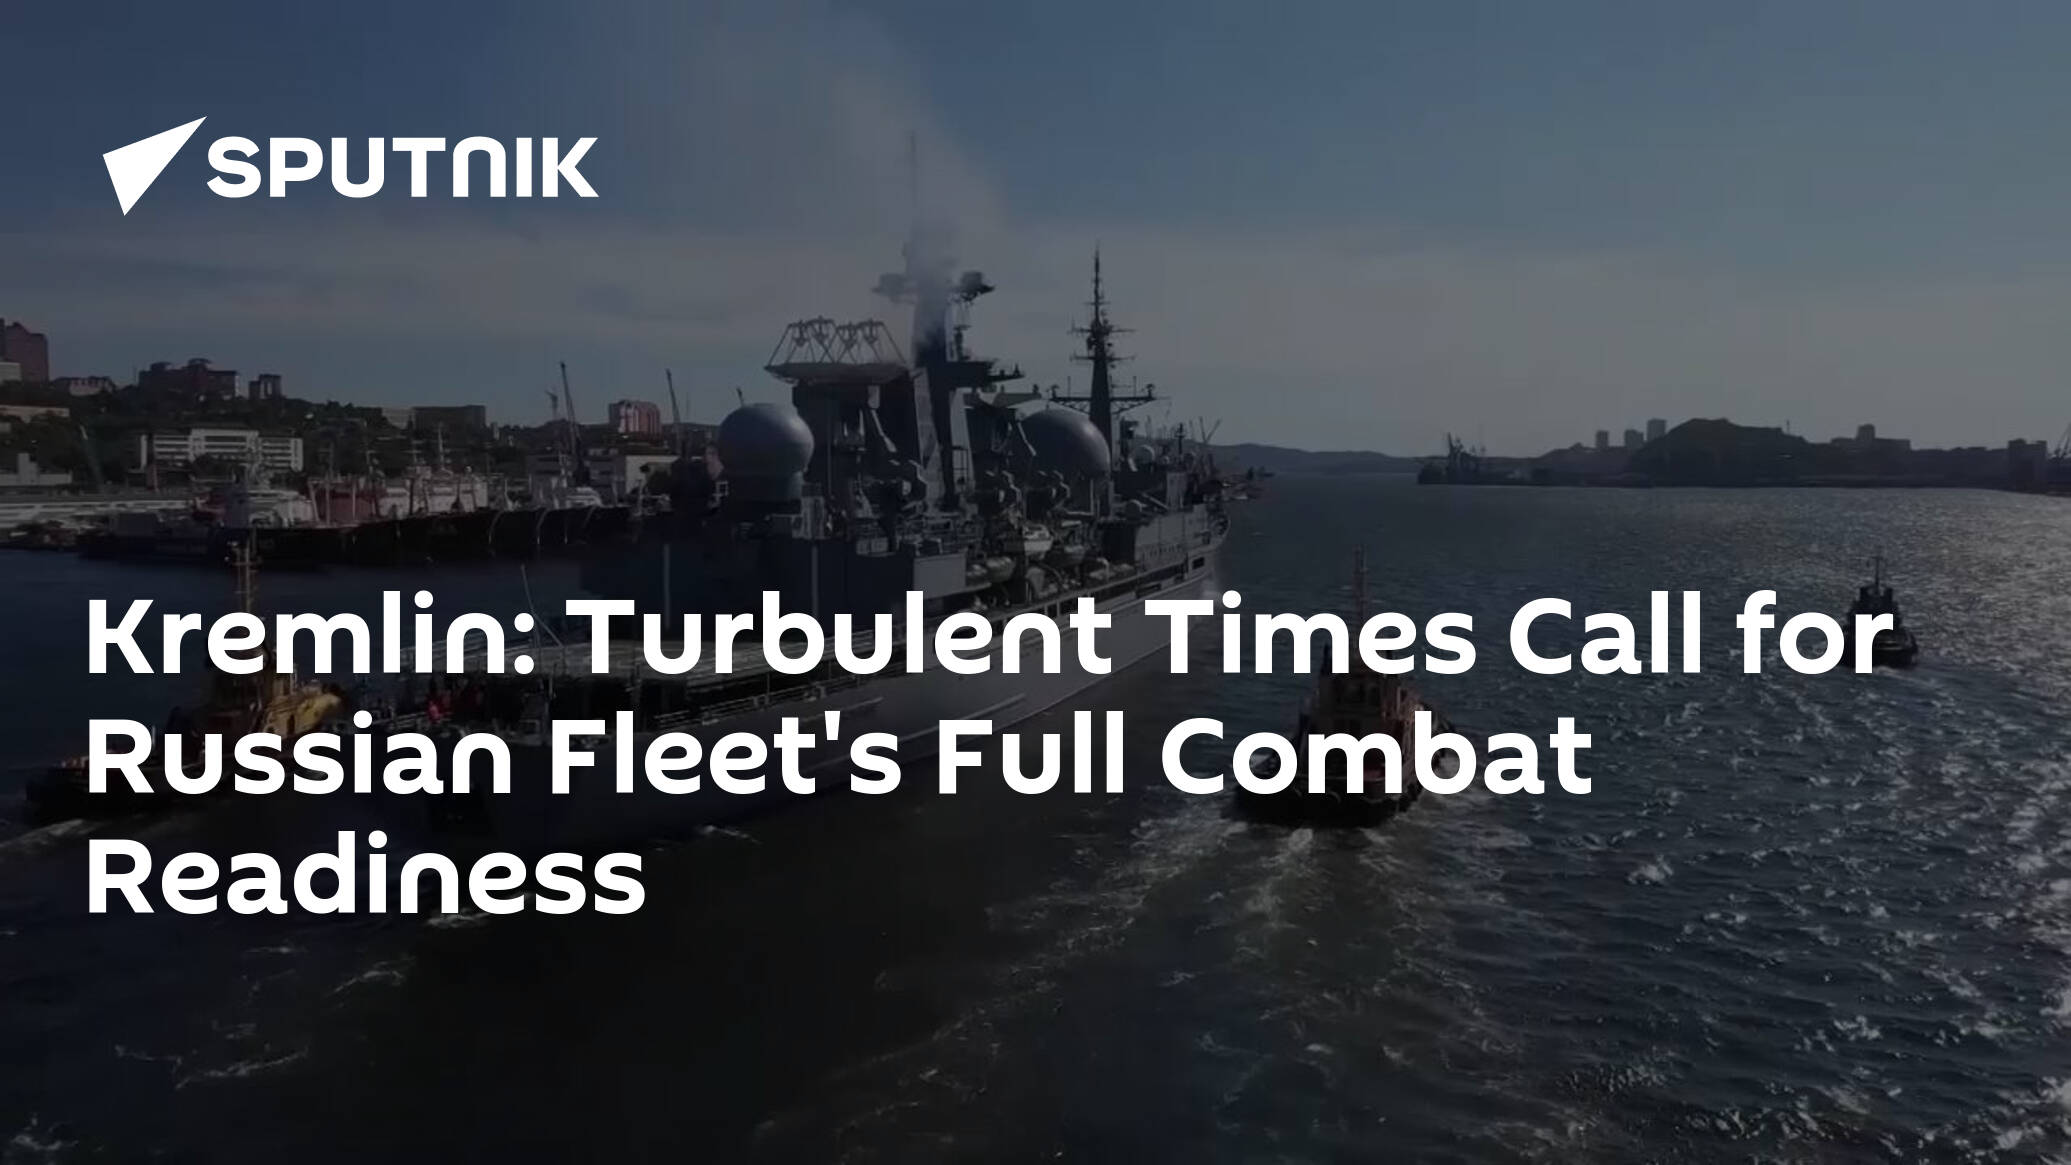 Kremlin: Turbulent Times Call for Russian Fleet's Full Combat Readiness